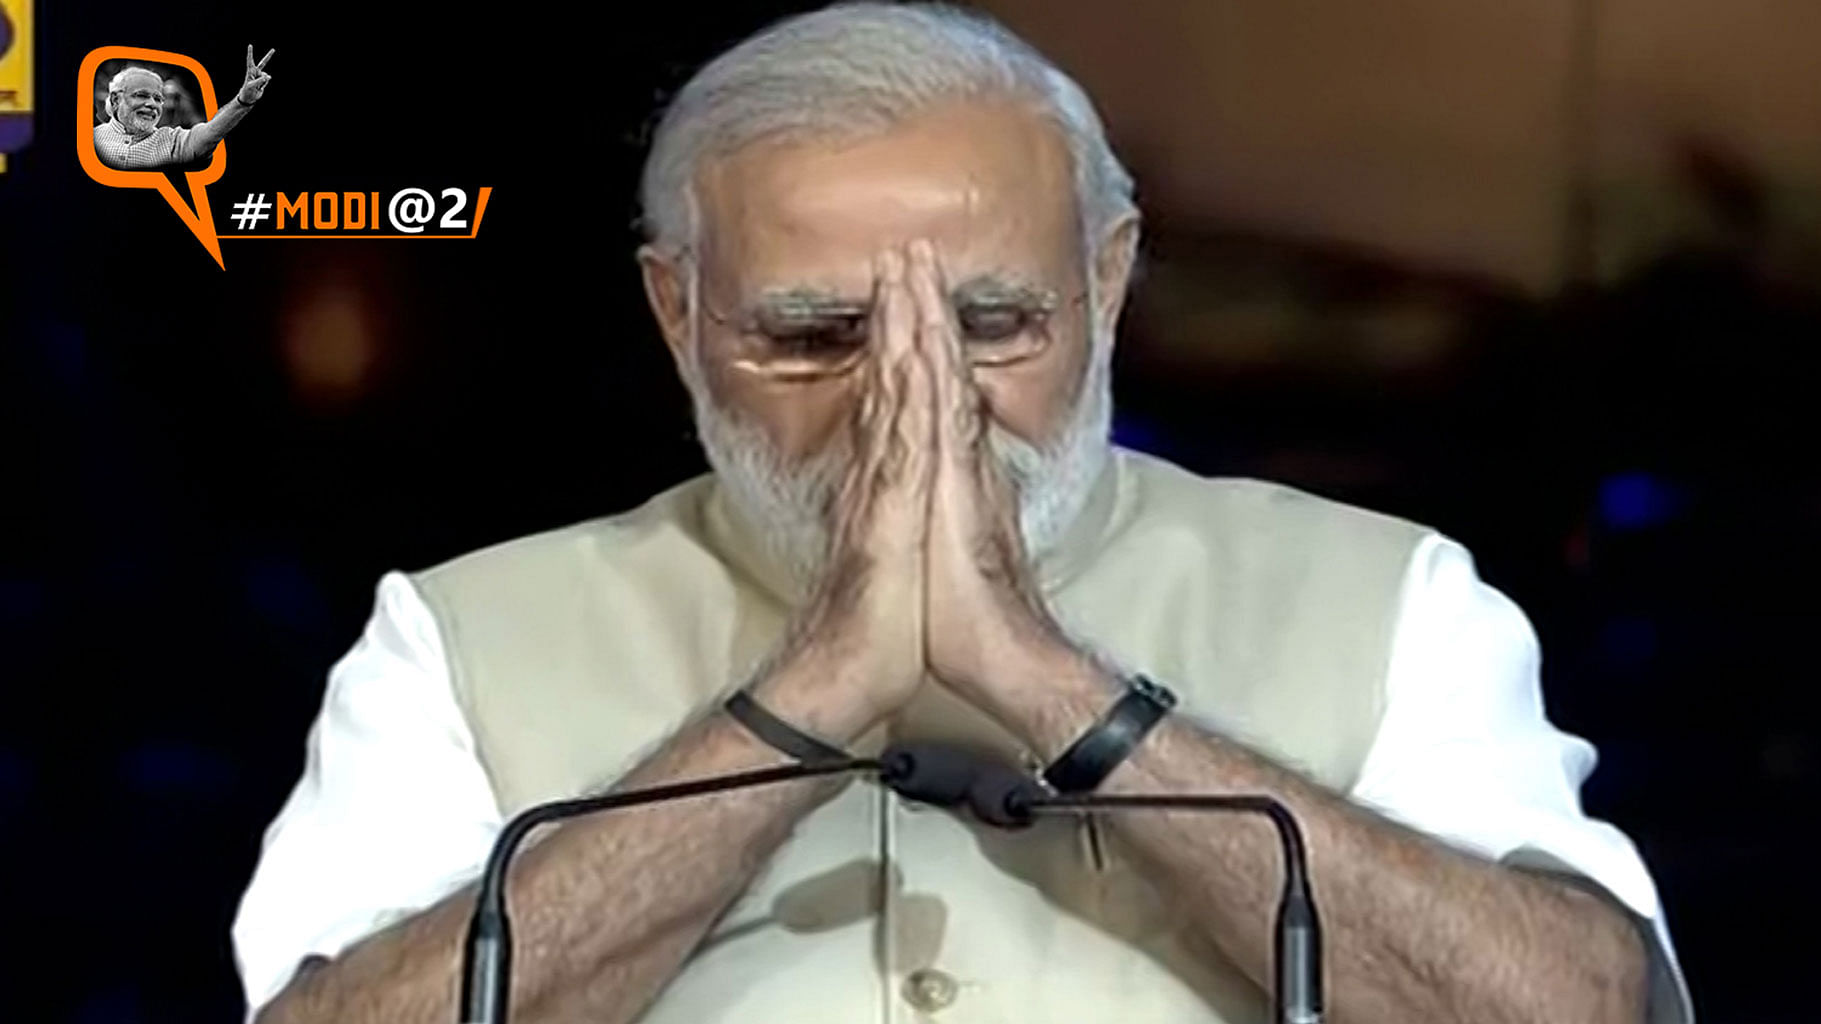 PM Modi celebrates two years in office at India Gate. (Photo: ANI screengrab)